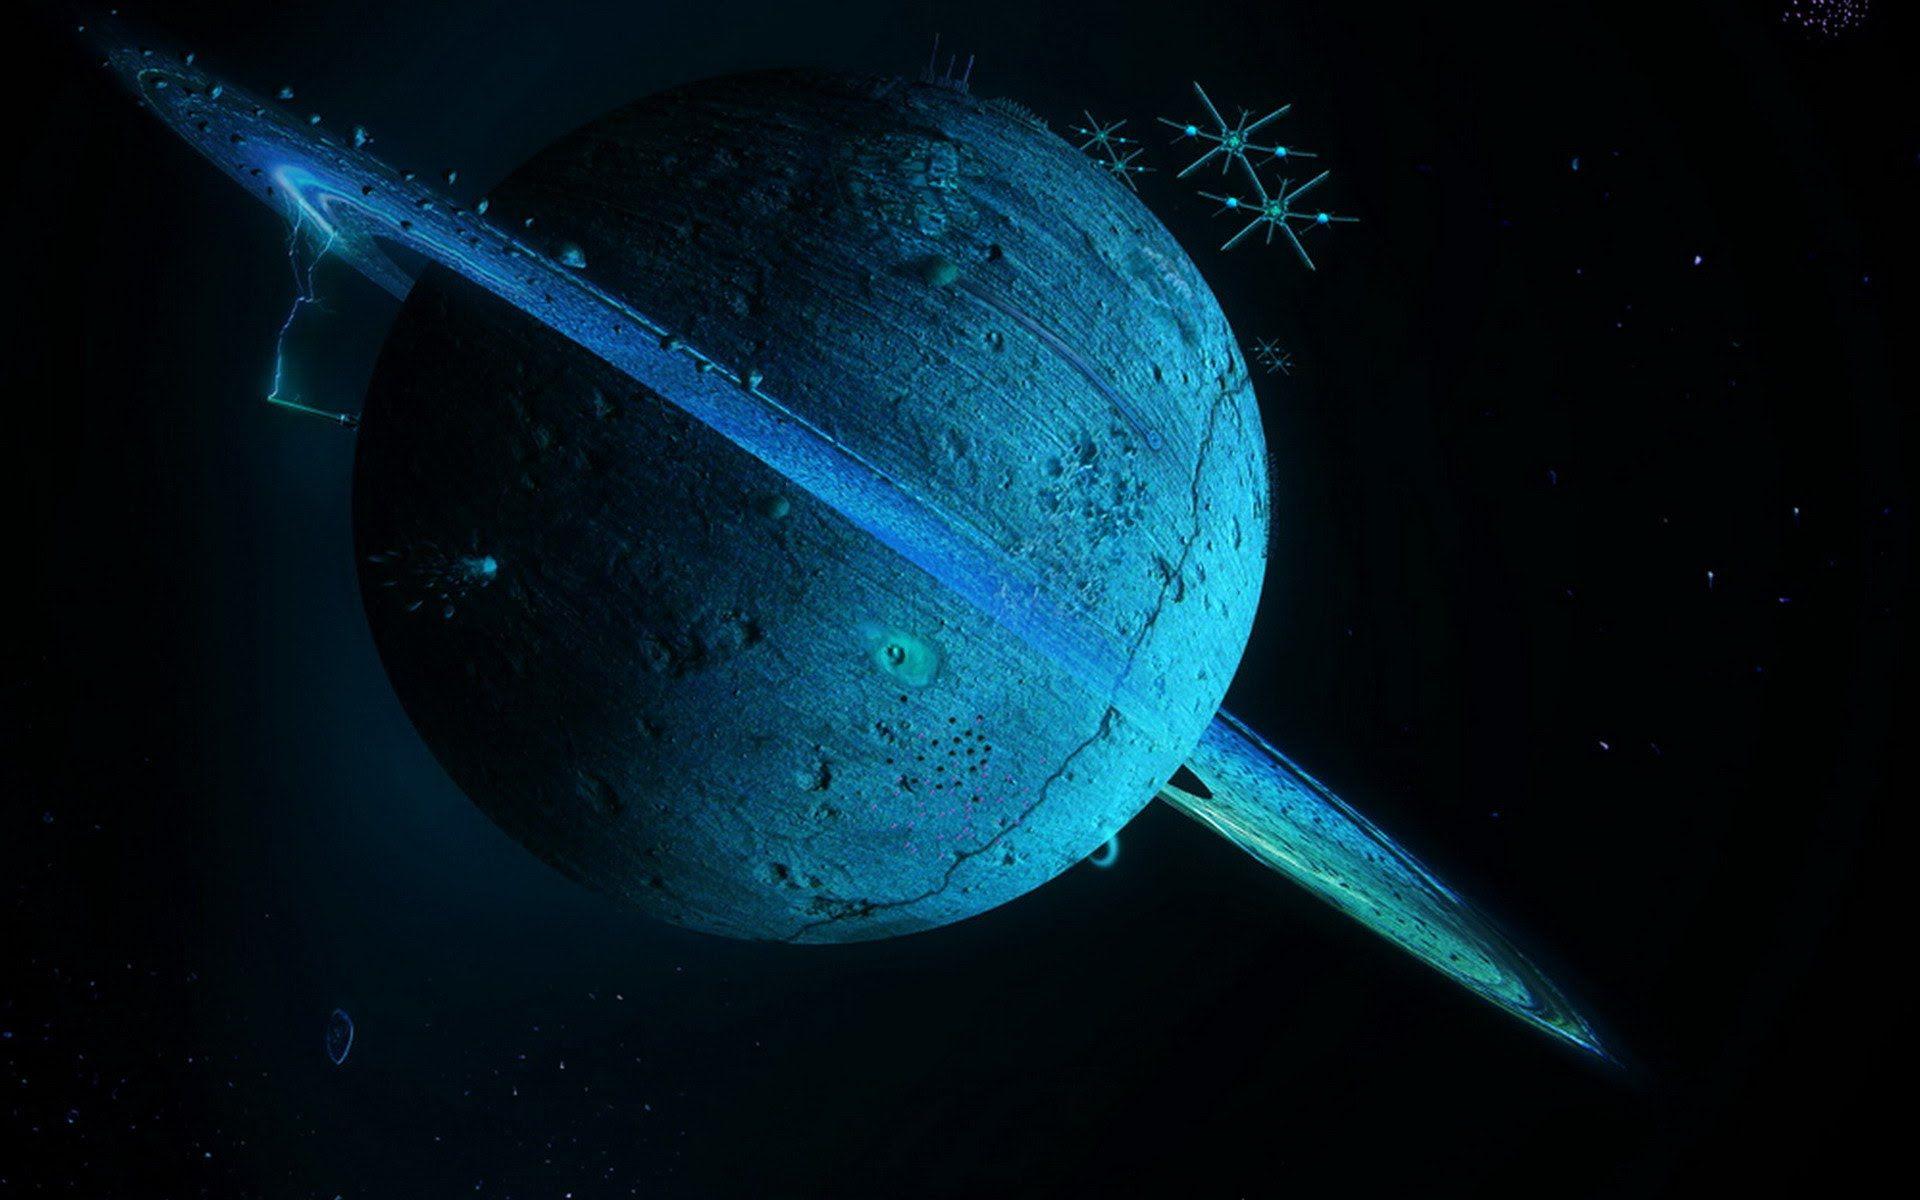 Seventh blue planet Uranus wallpaper and image